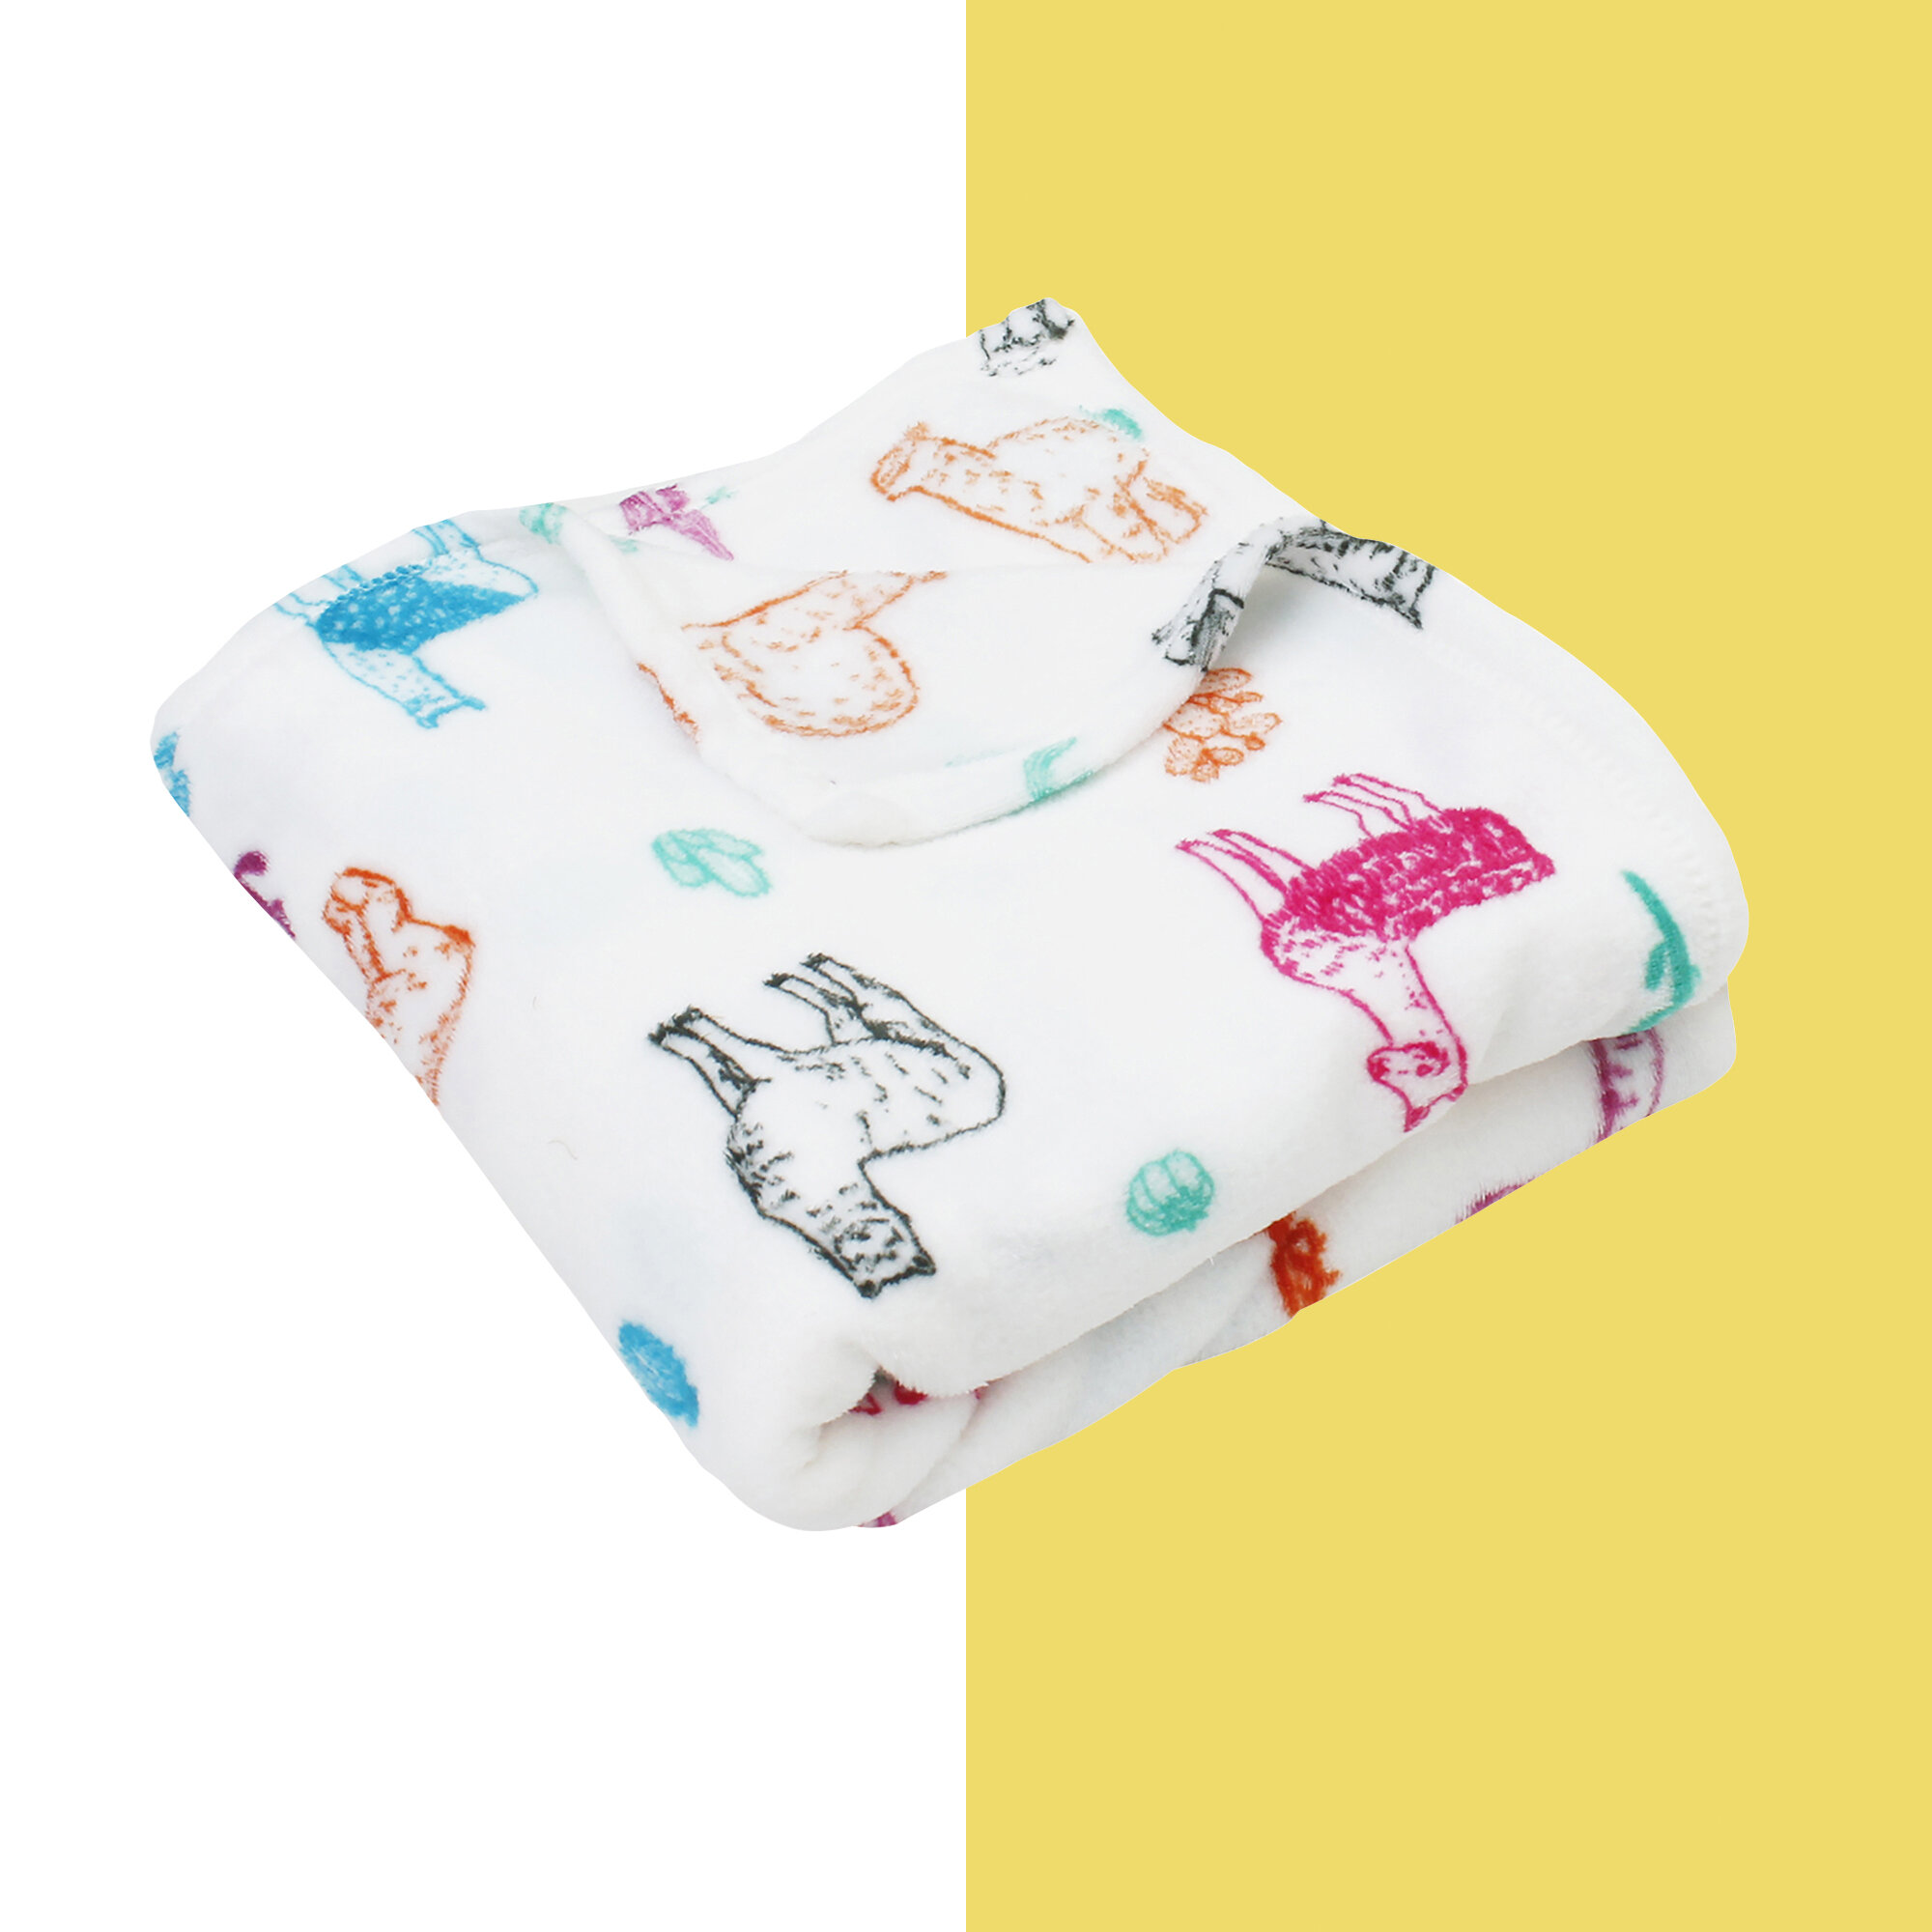 150×100cm AISSO Cute Llama Alpaca Prints Soft Warm Cozy Blanket Throw for Bed Couch Sofa Picnic Camping Beach 